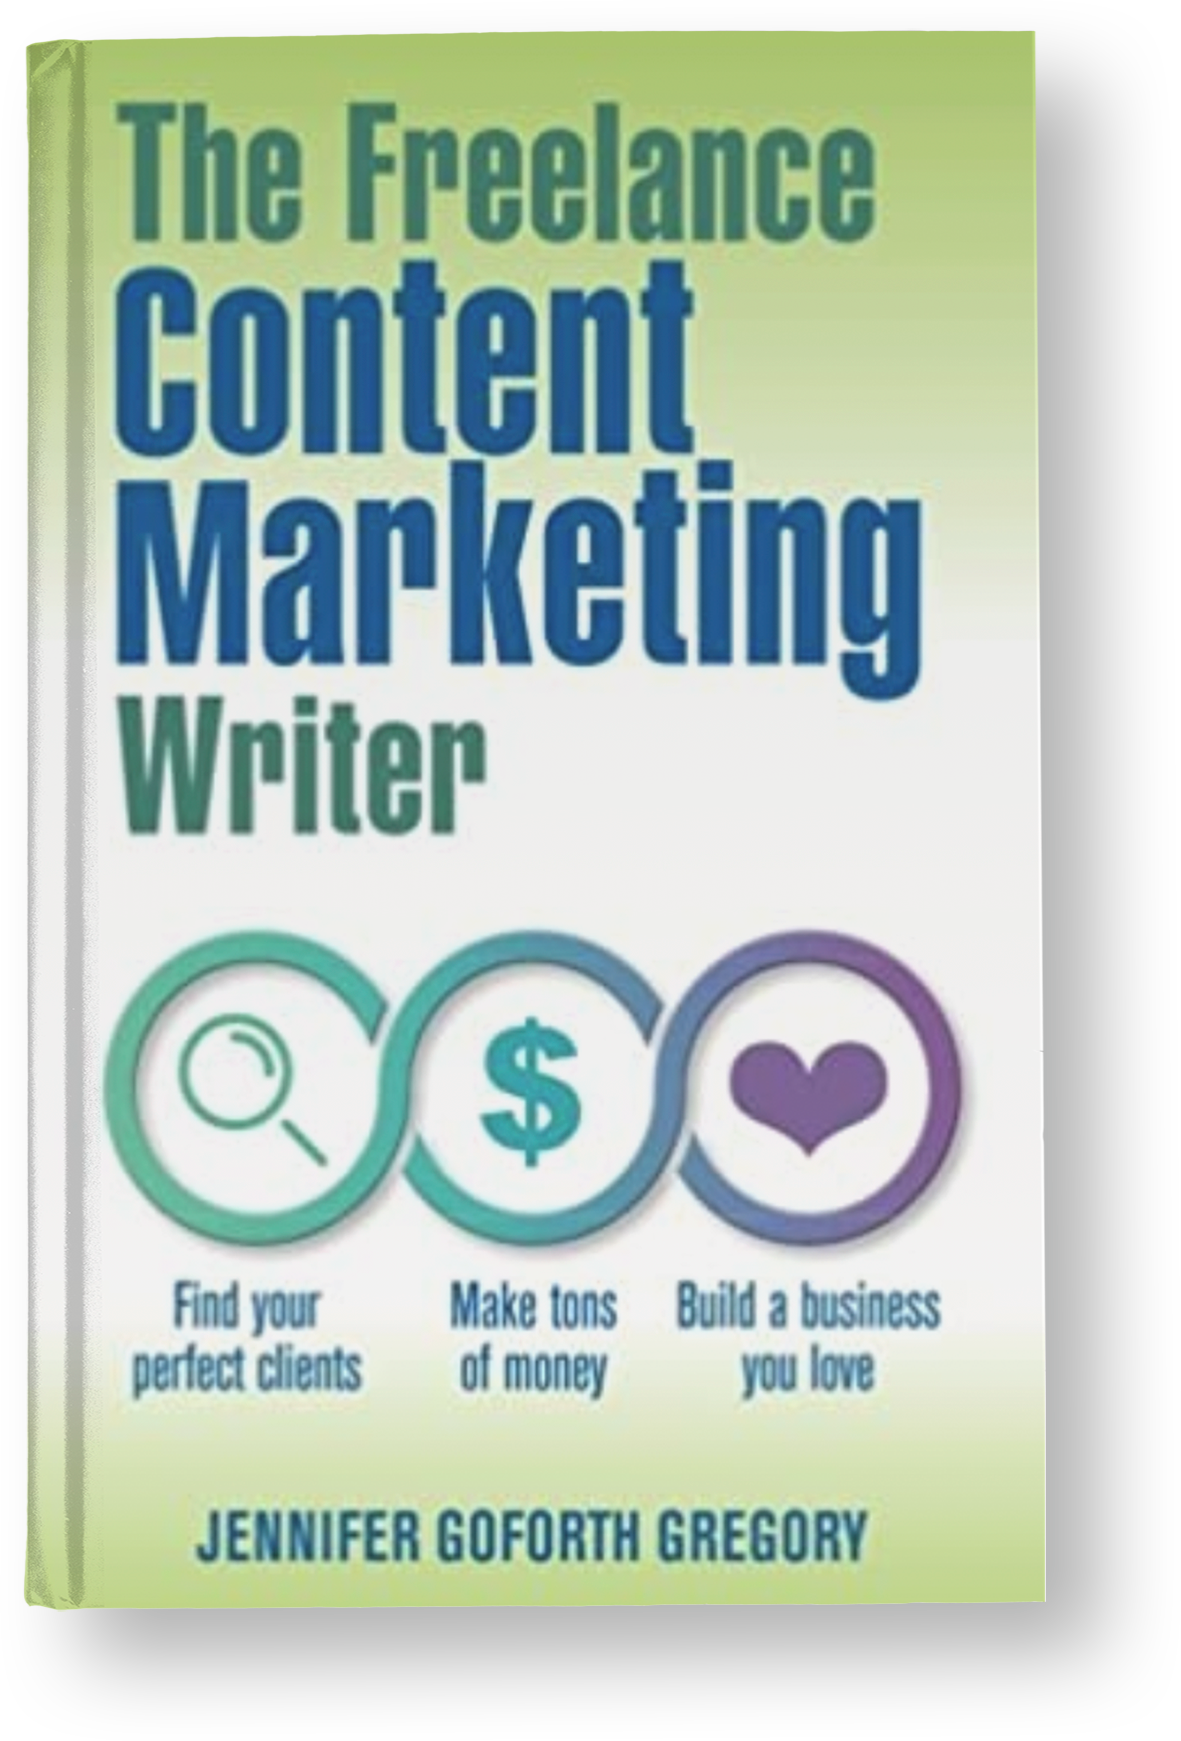 Content Marketing Writer